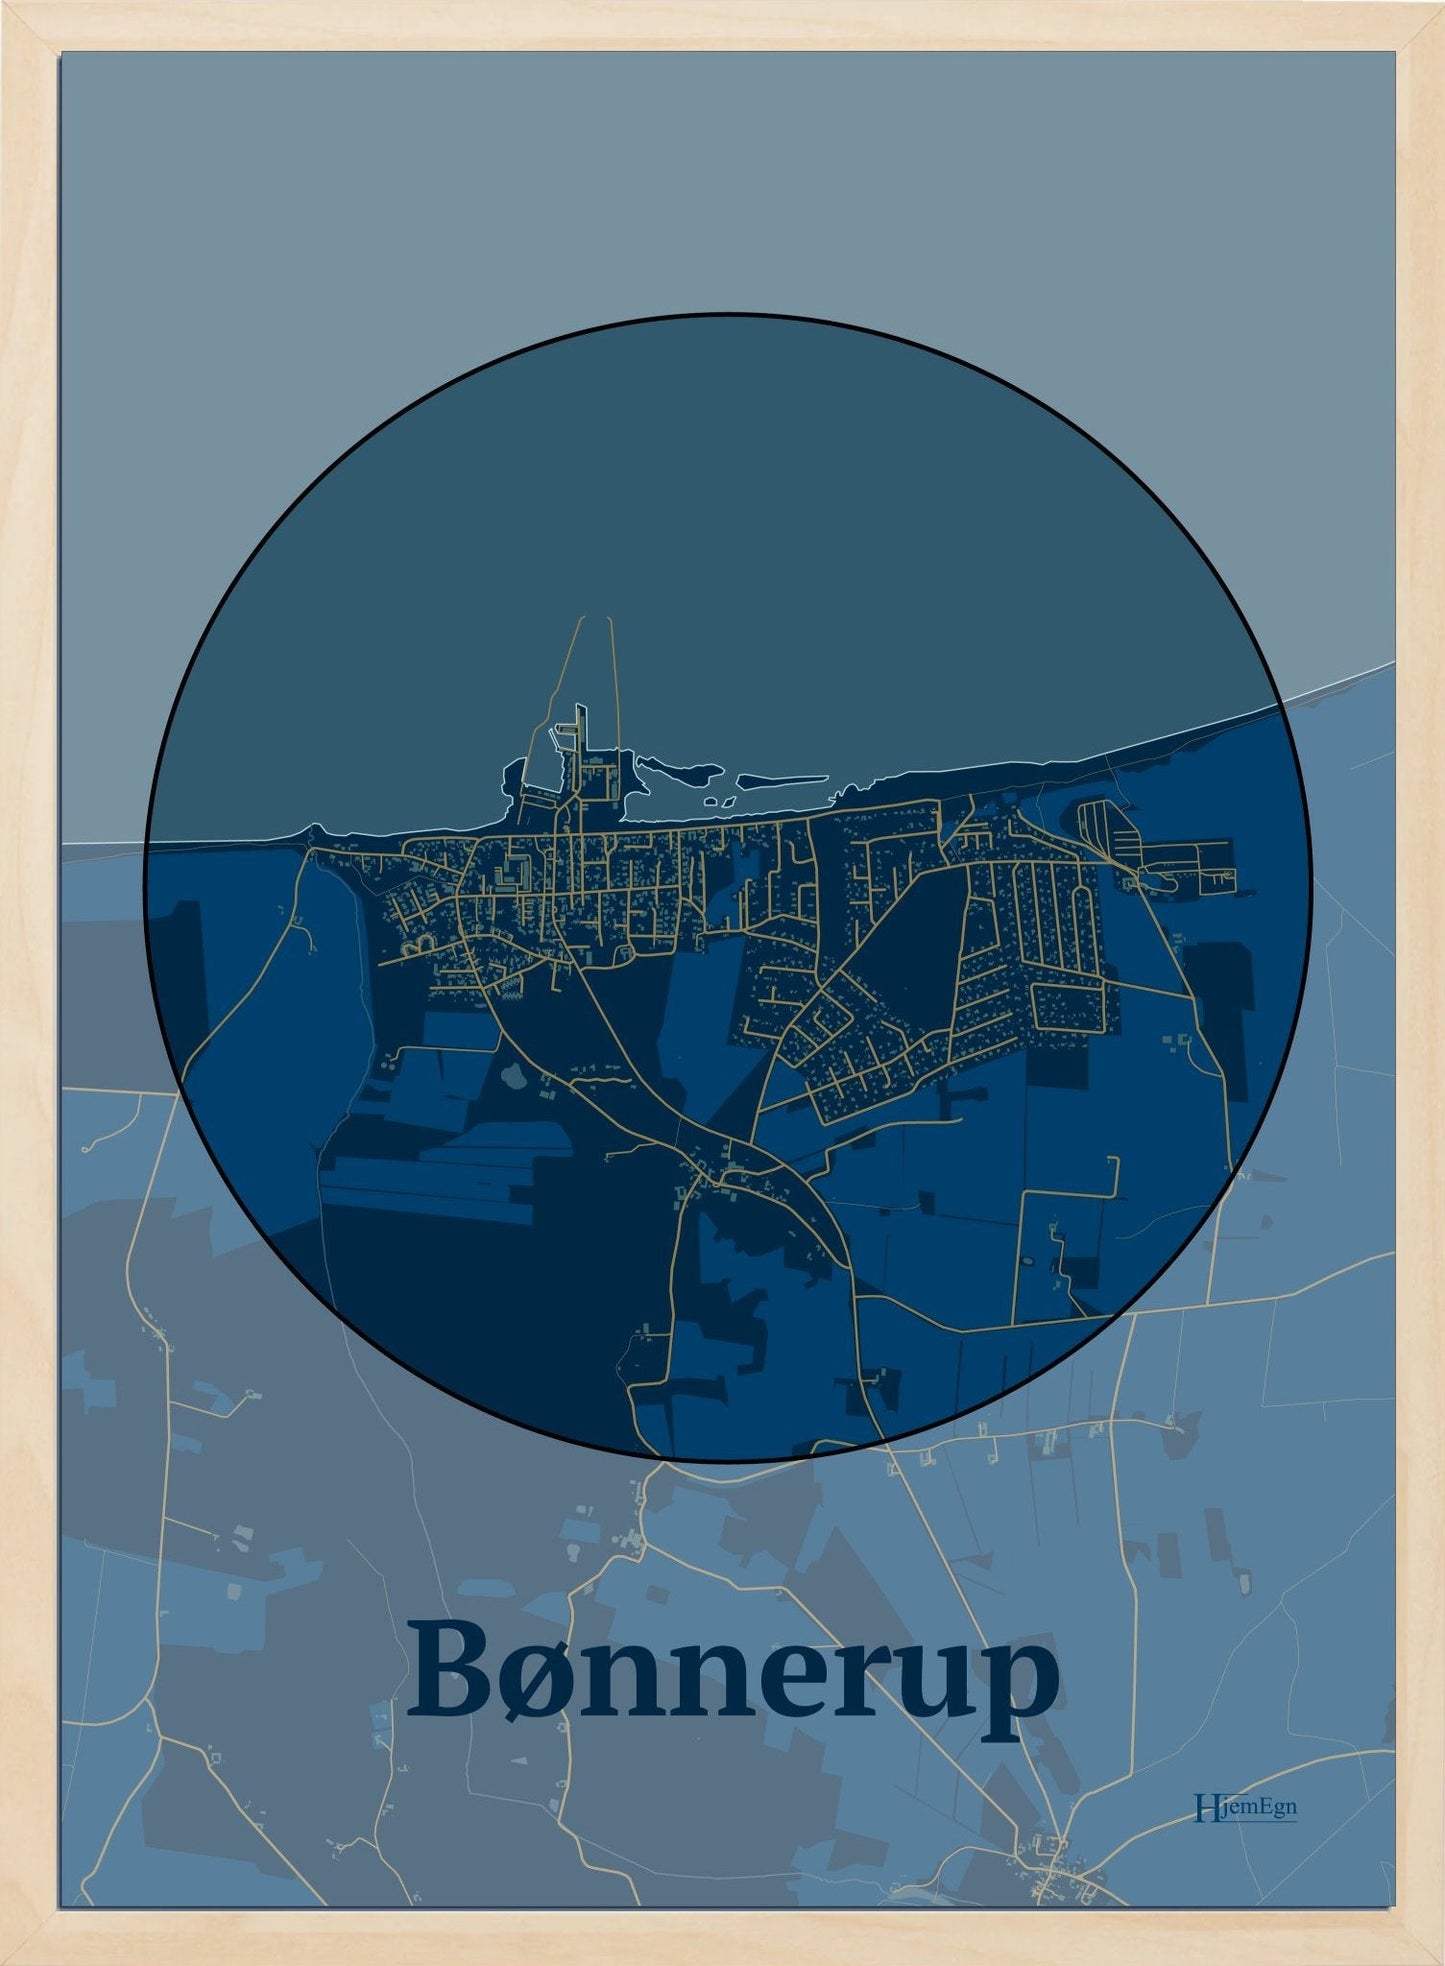 Bønnerup plakat i farve mørk blå og HjemEgn.dk design centrum. Design bykort for Bønnerup